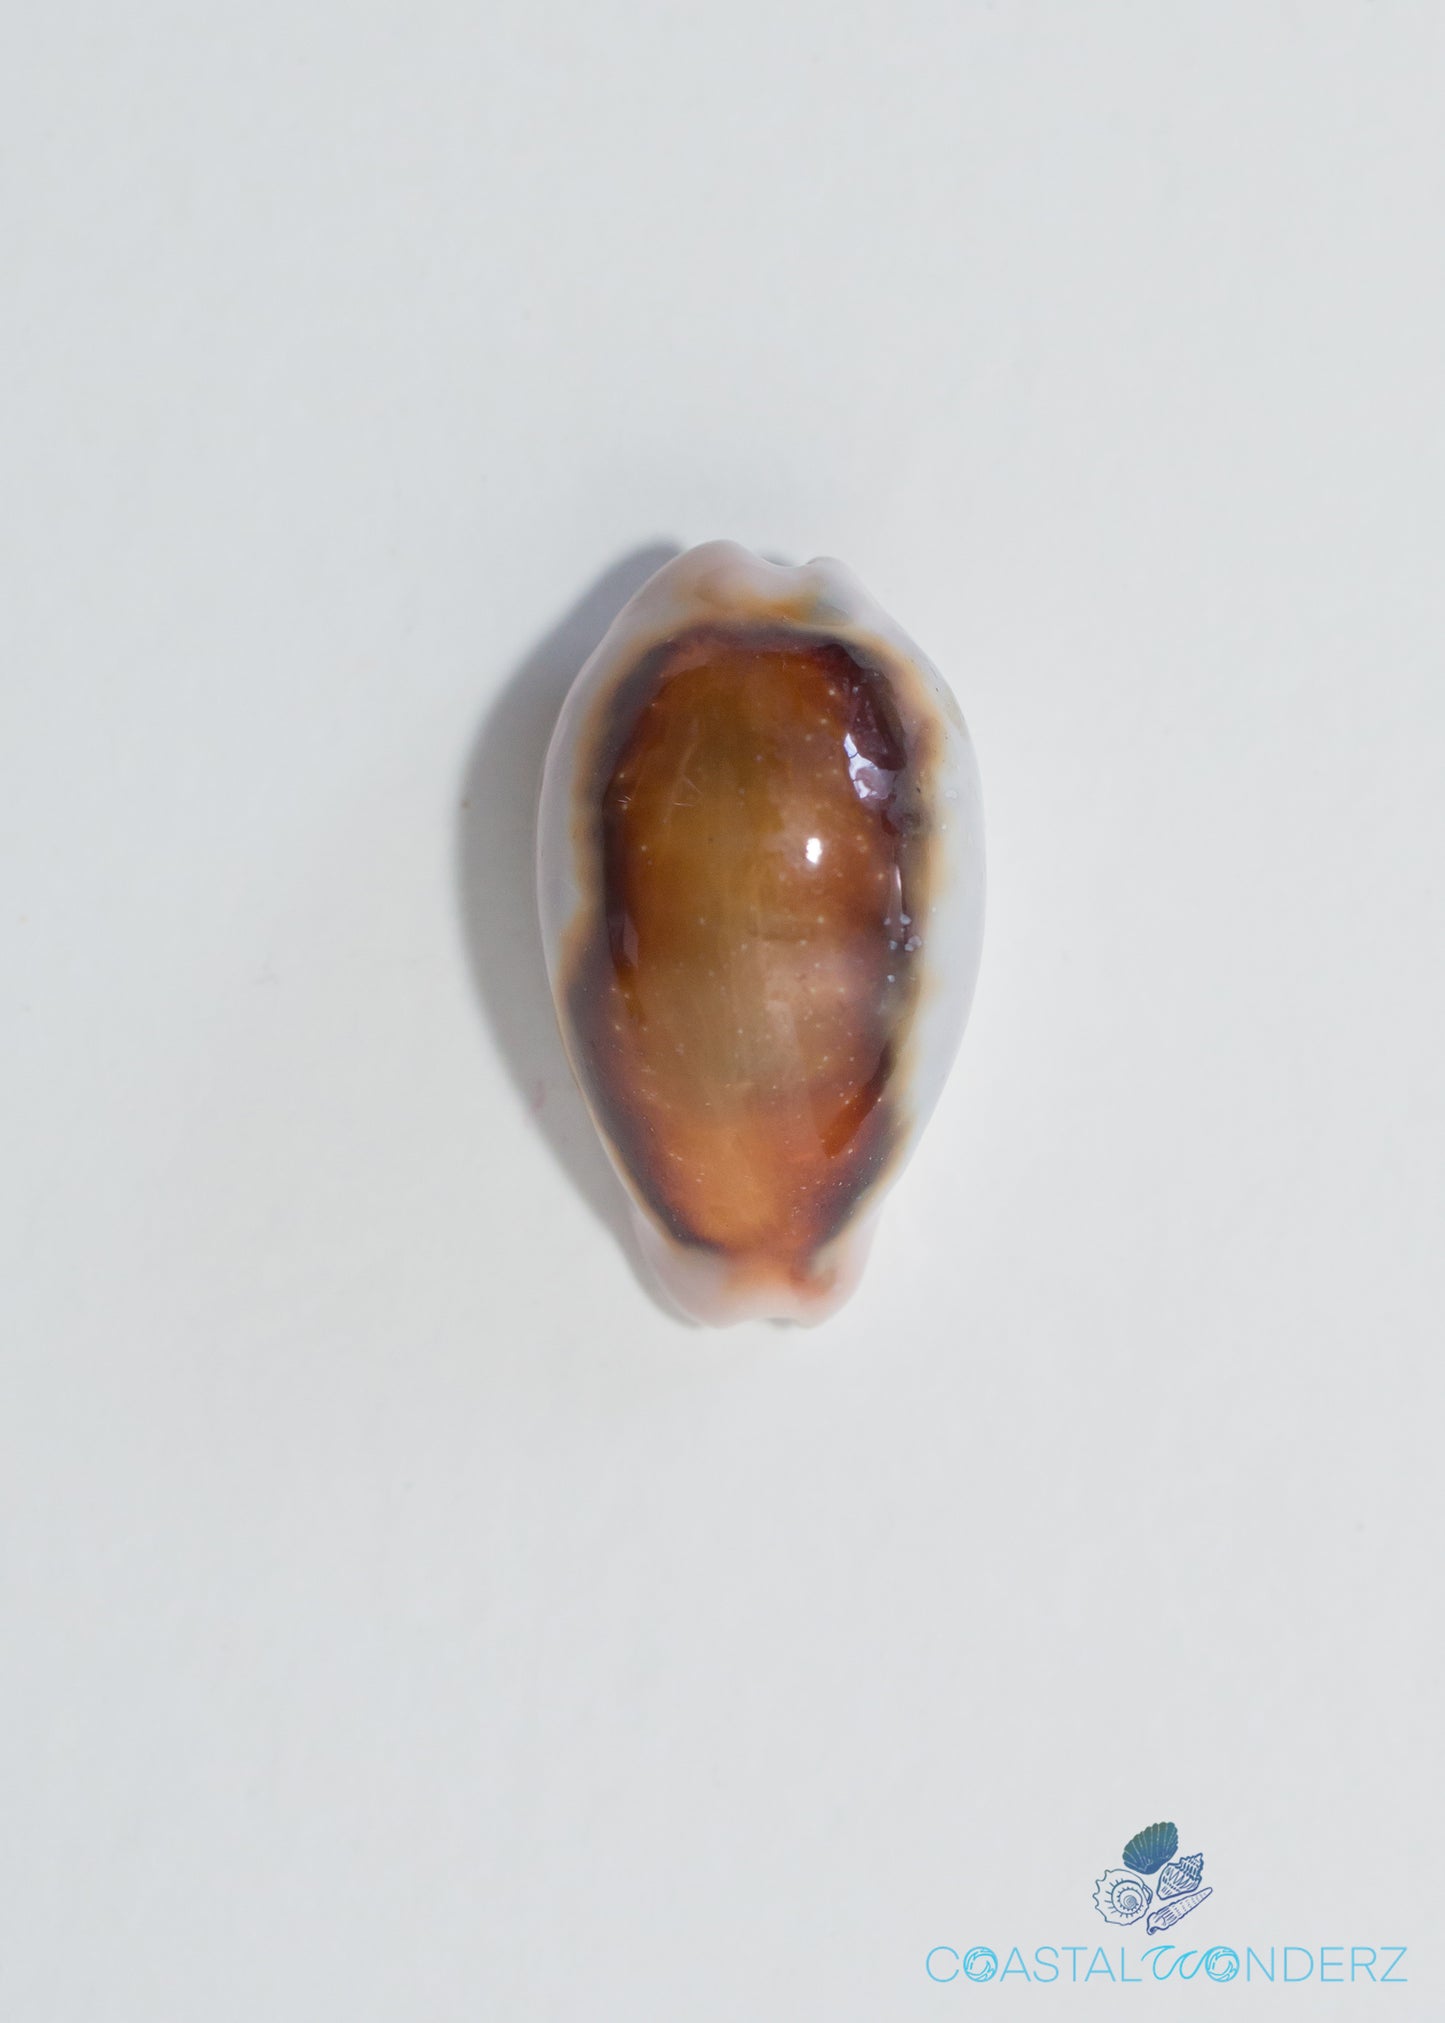 Chestnut Cowrie Shell (Cypraea Spadicea and Neobernaya spadicea)